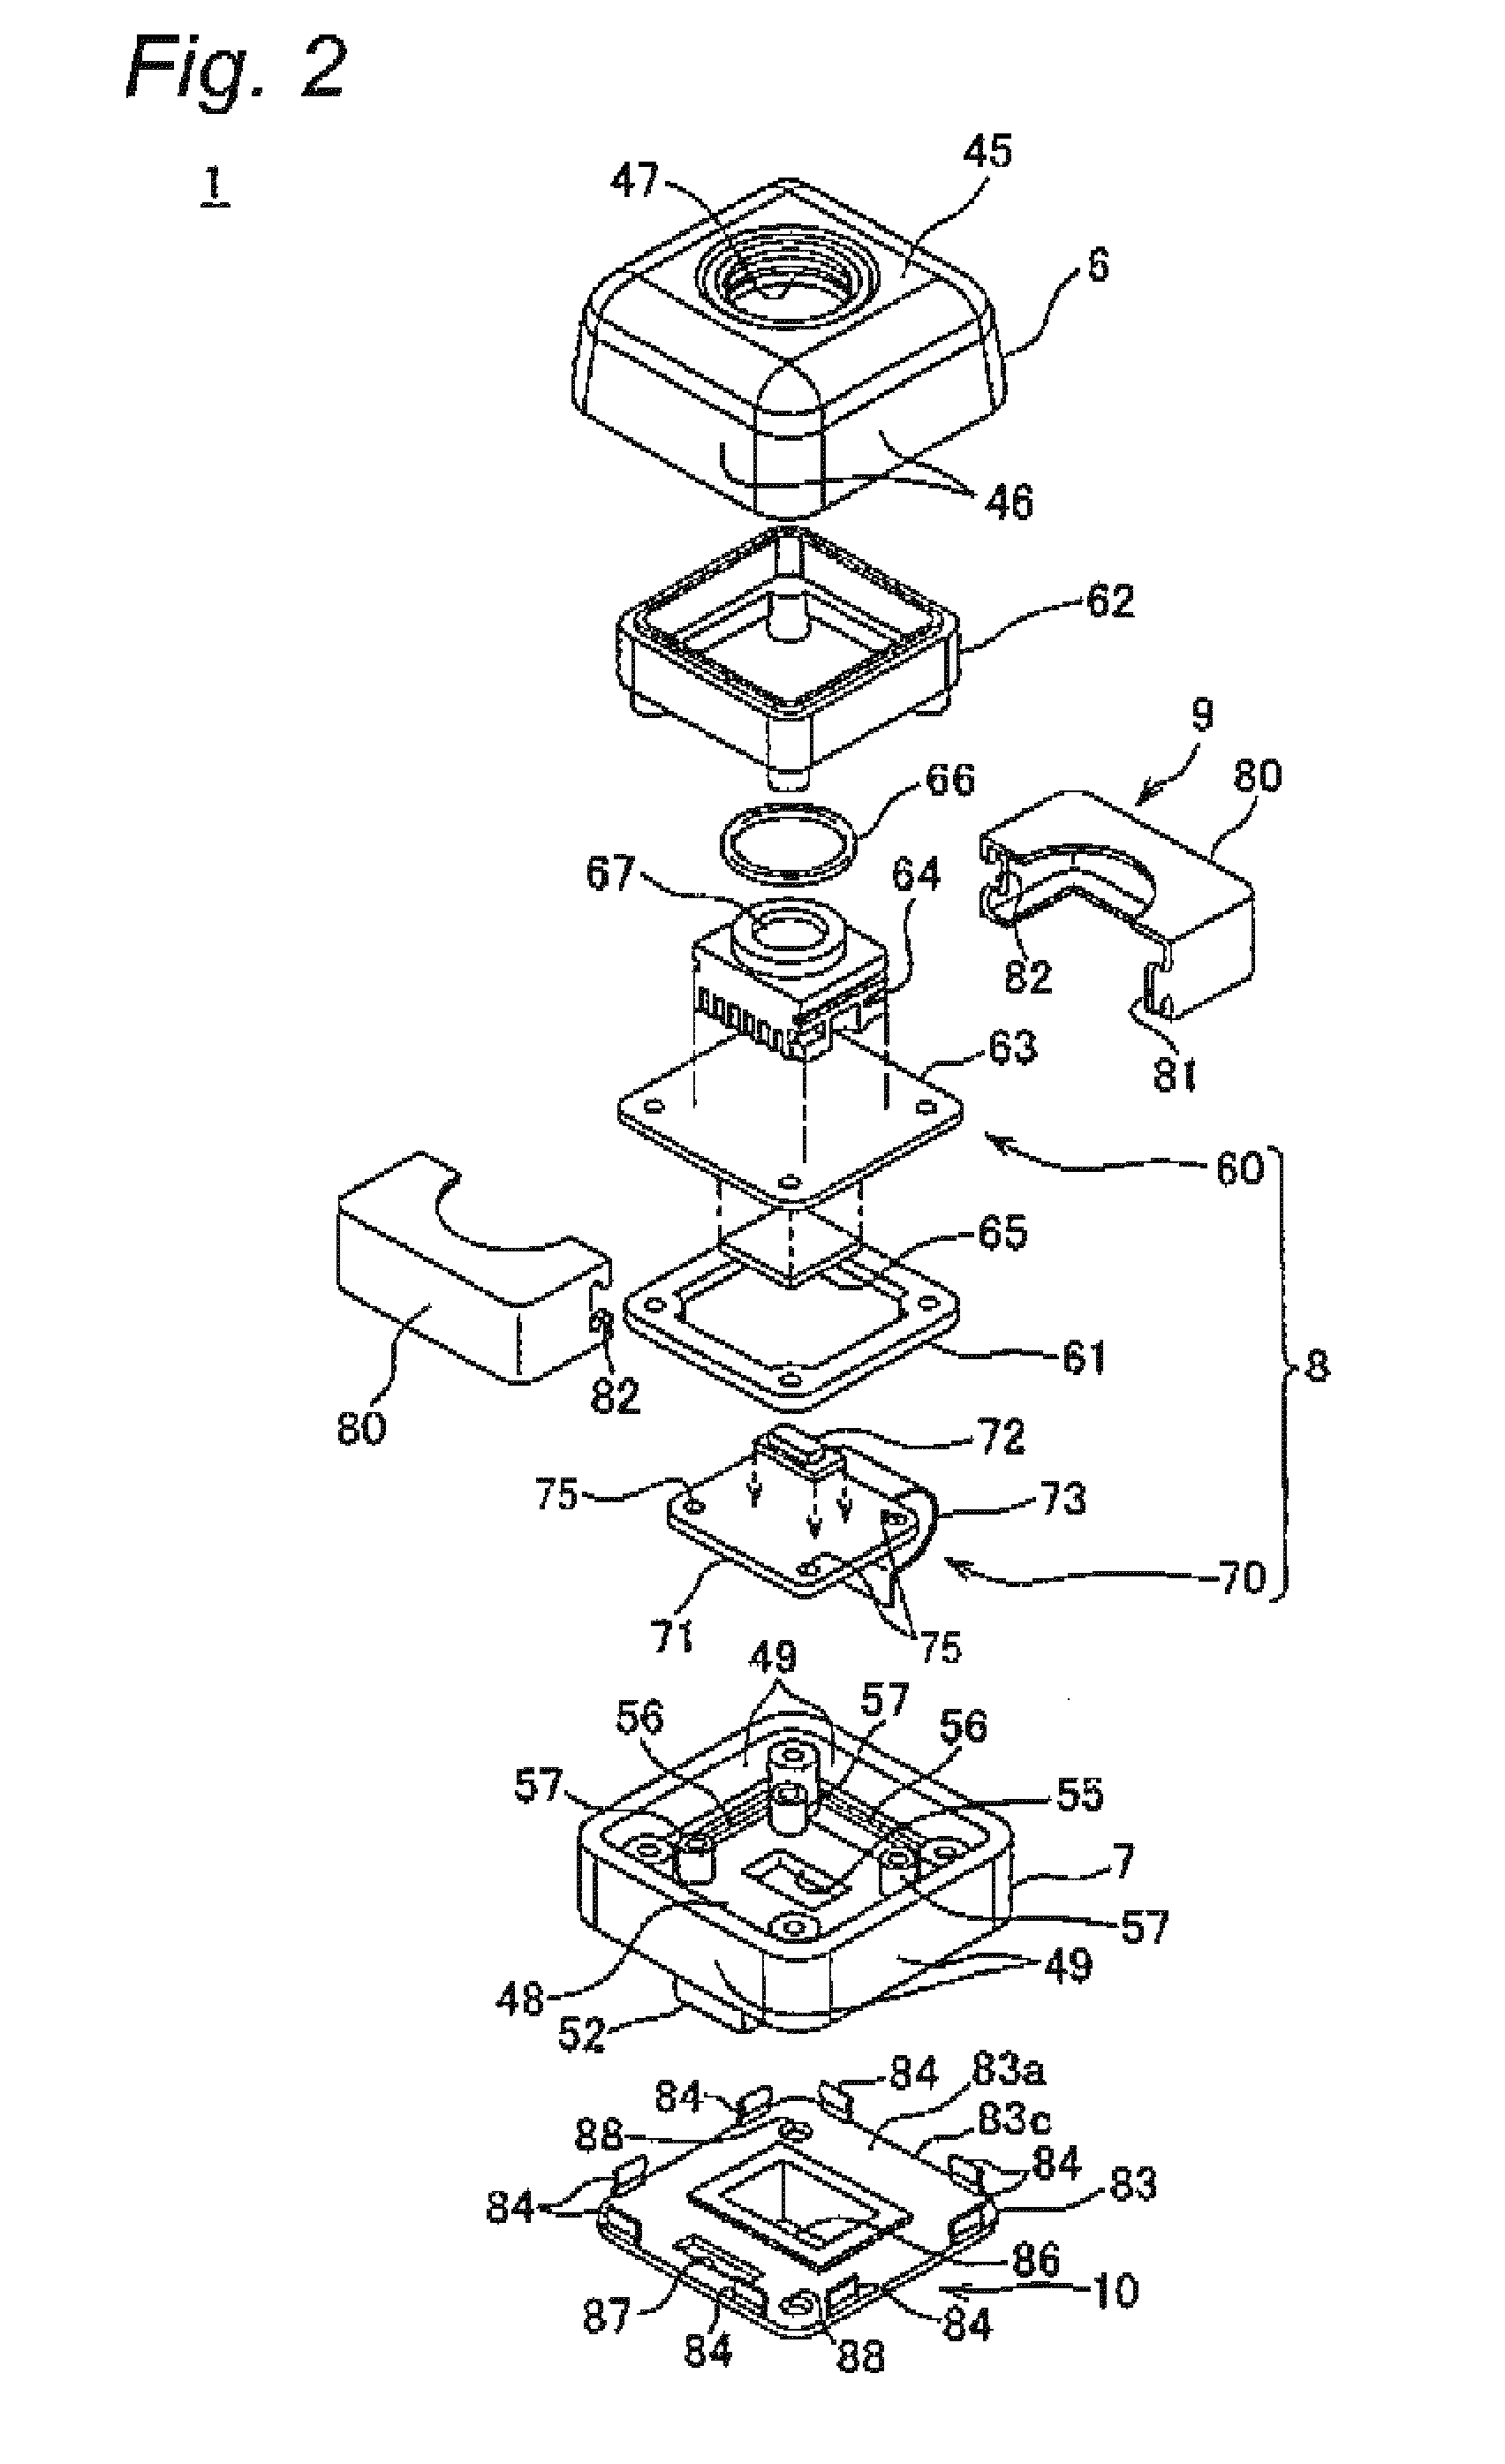 Electric apparatus module